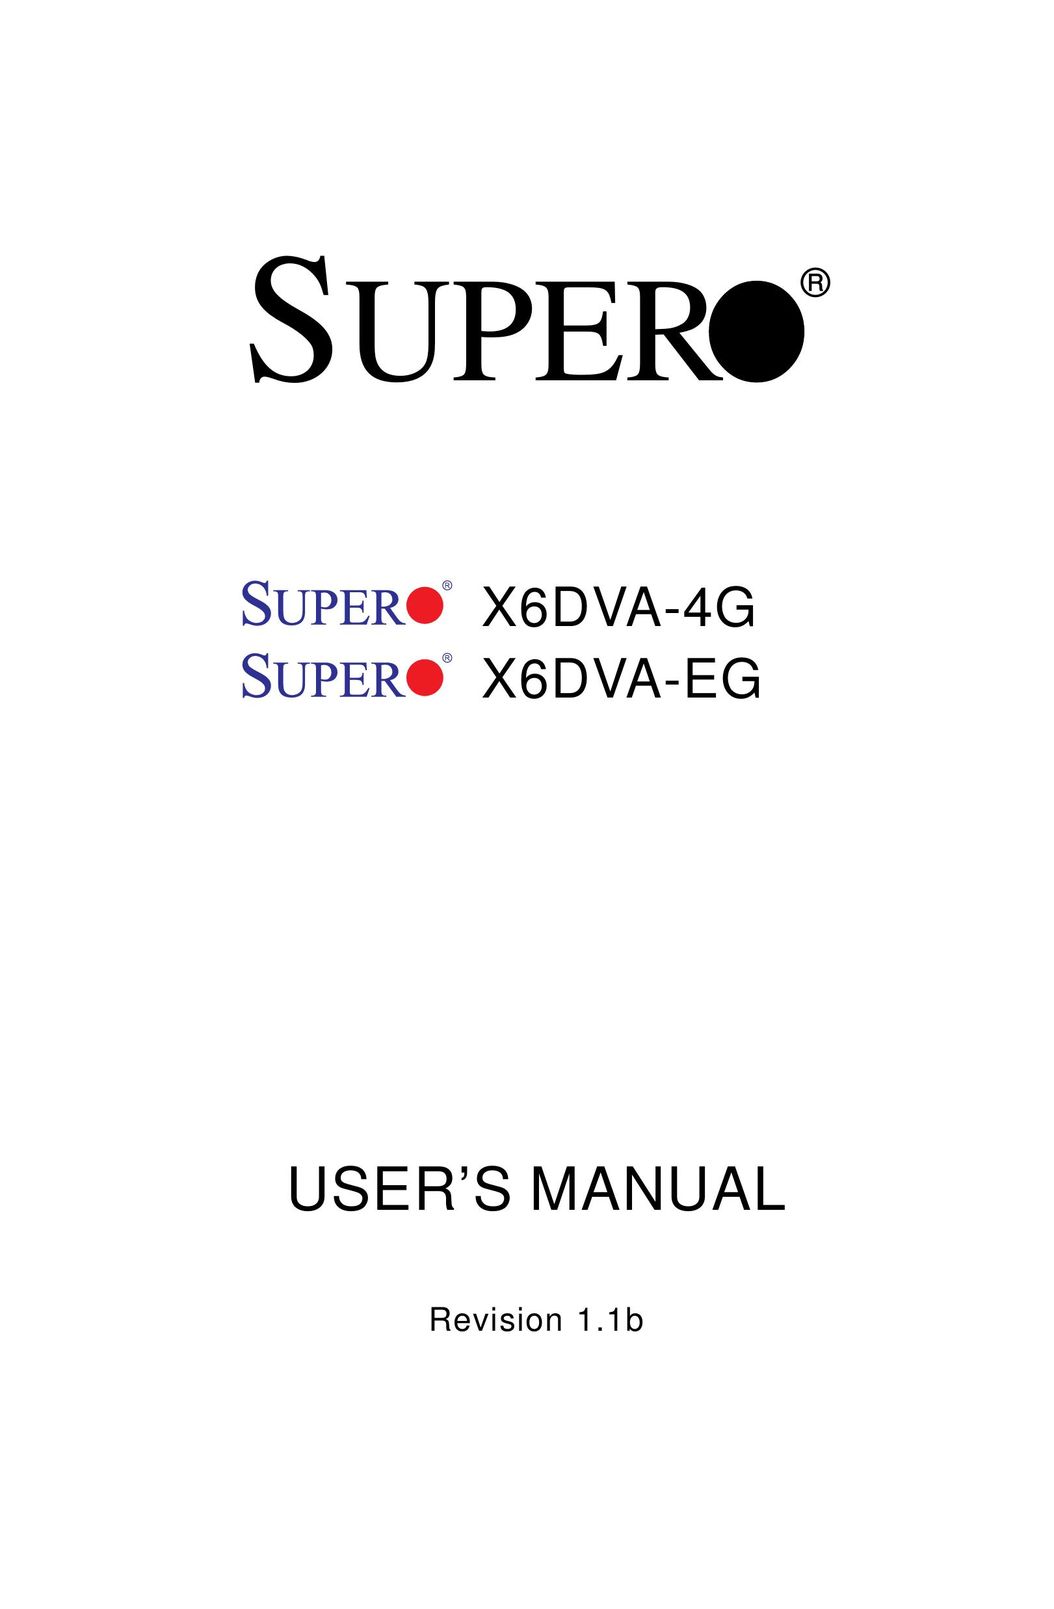 American Megatrends X6DVA-EG Network Card User Manual